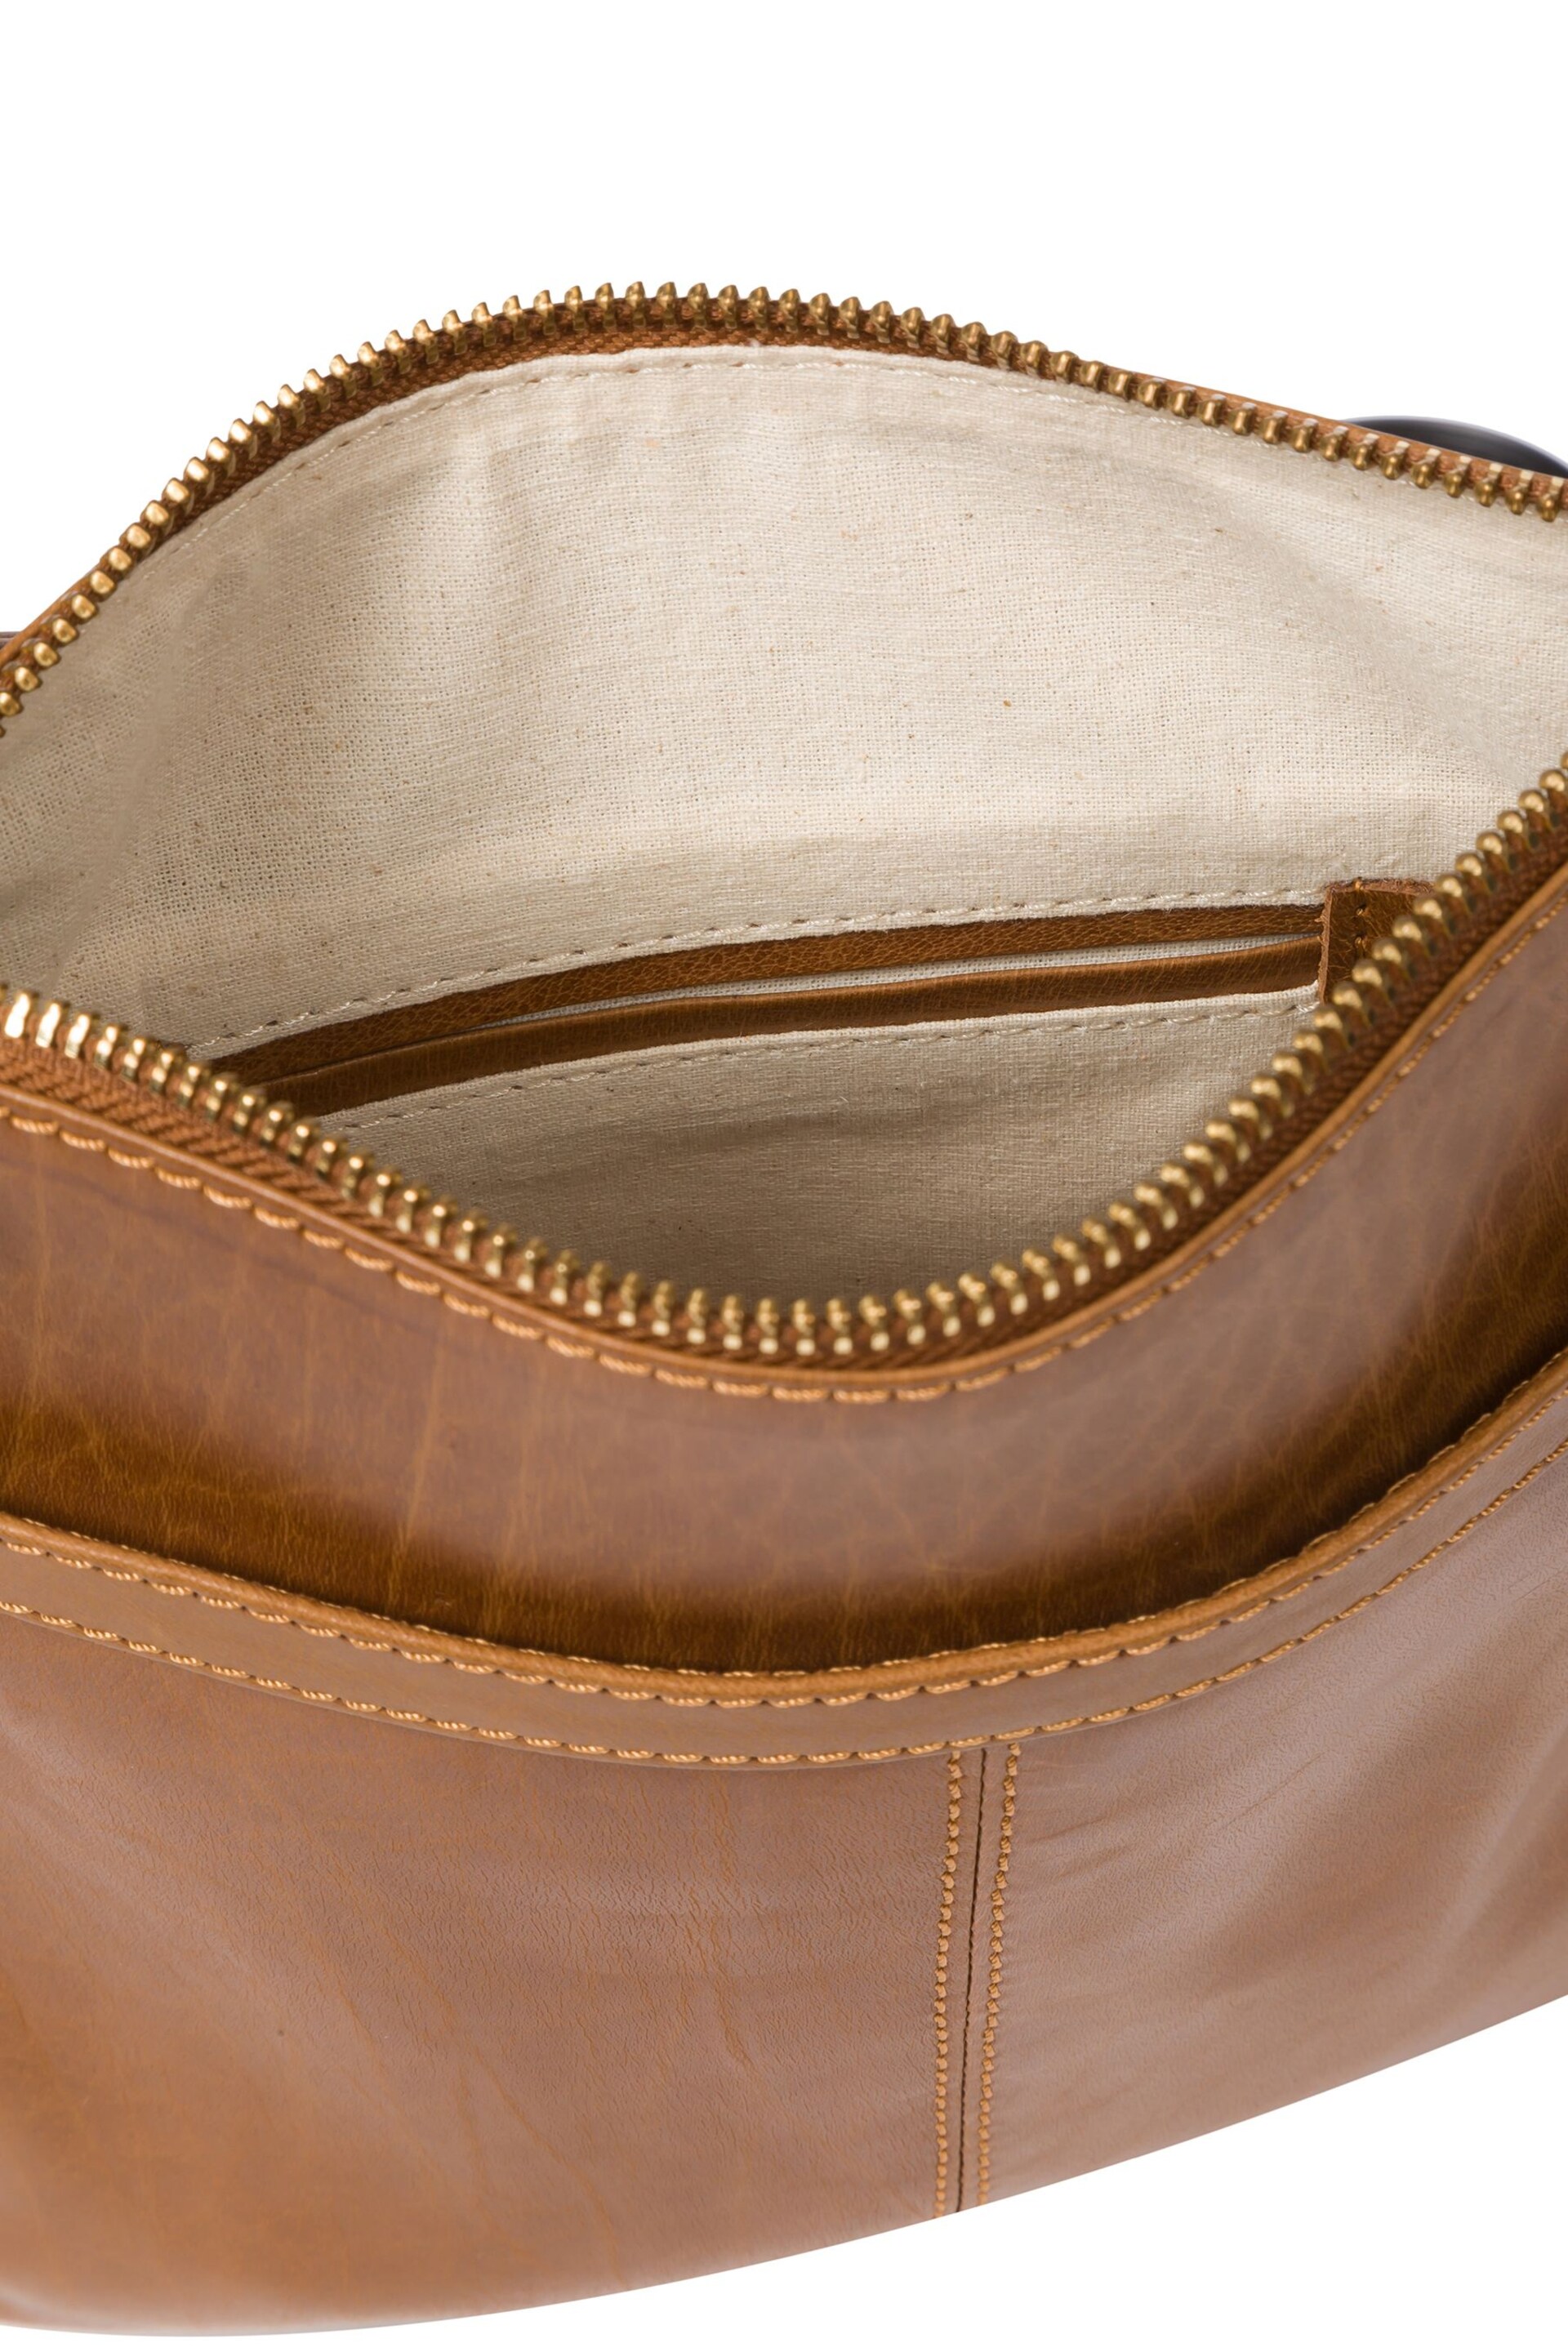 Conkca Lauryn Leather Cross-Body Bag - Image 4 of 6